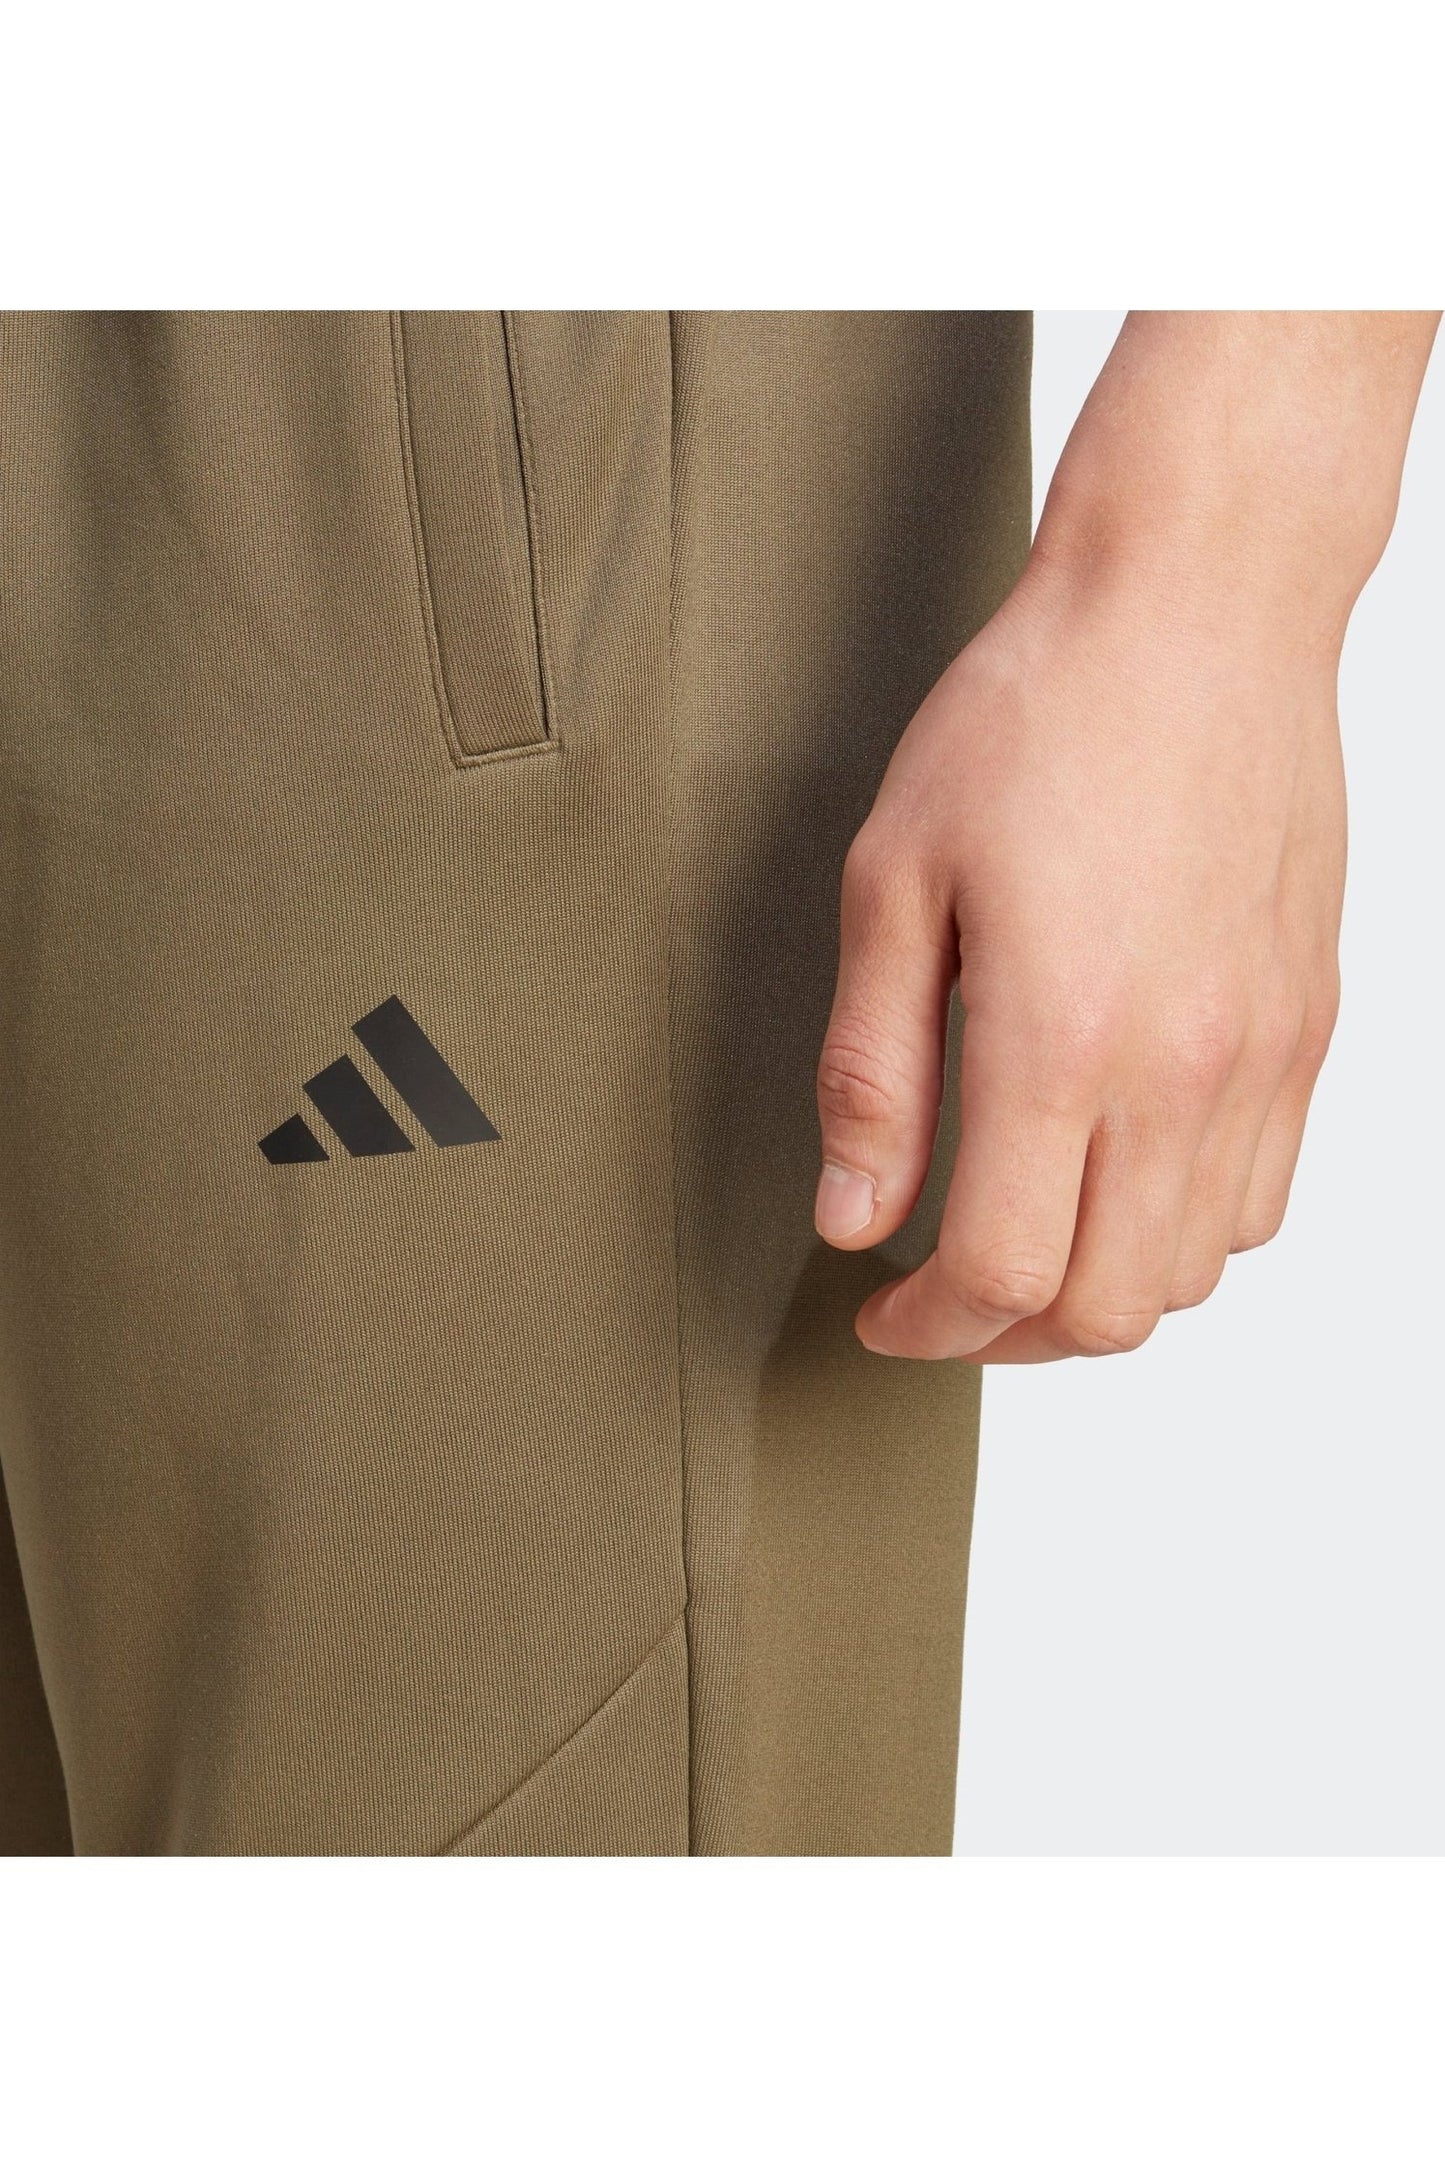 ADIDAS - מכנסיים ארוכים לגברים GAME AND GO SMALL LOGO בצבע ירוק זית - MASHBIR//365